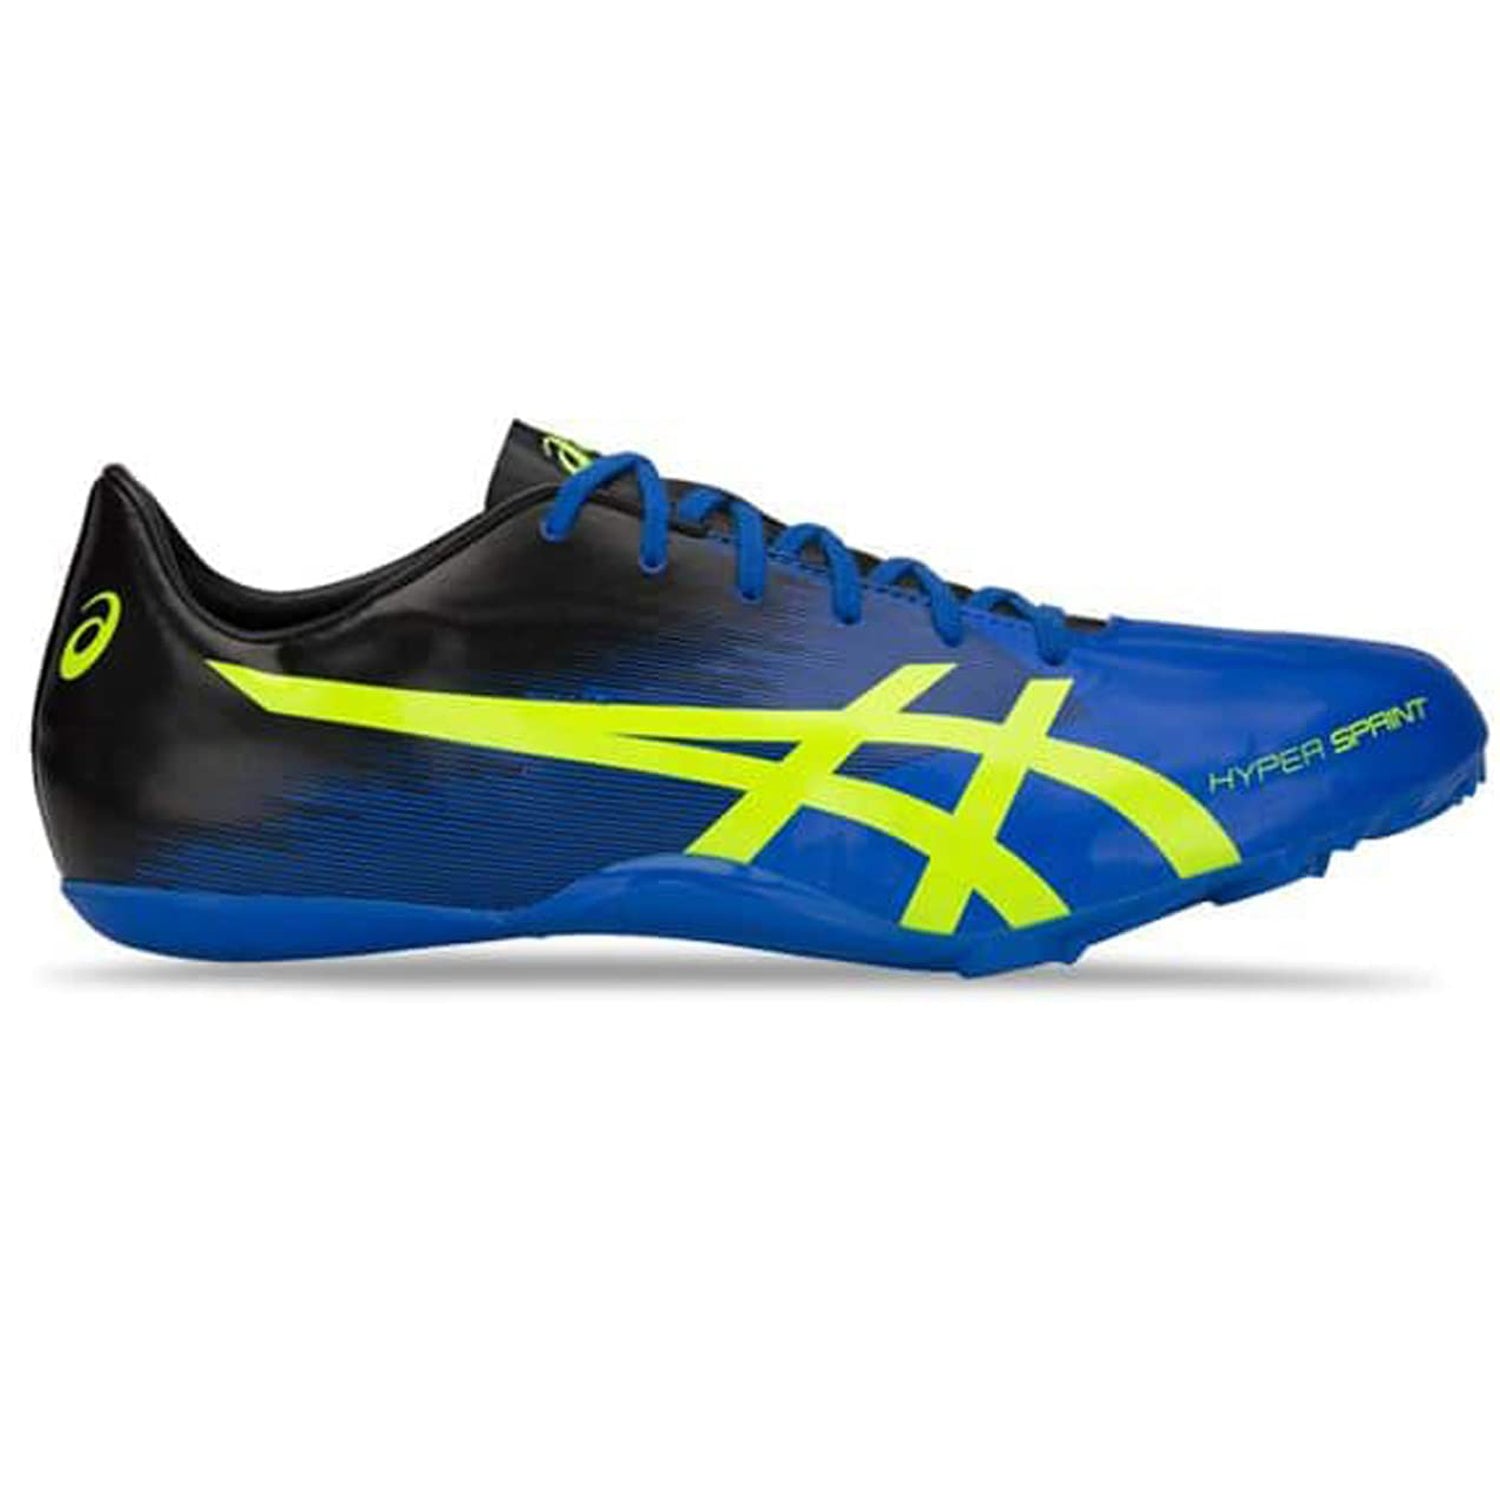 ASICS Men's Hypersprint 7 Running Shoes, Mist/Mist - Best Price online Prokicksports.com